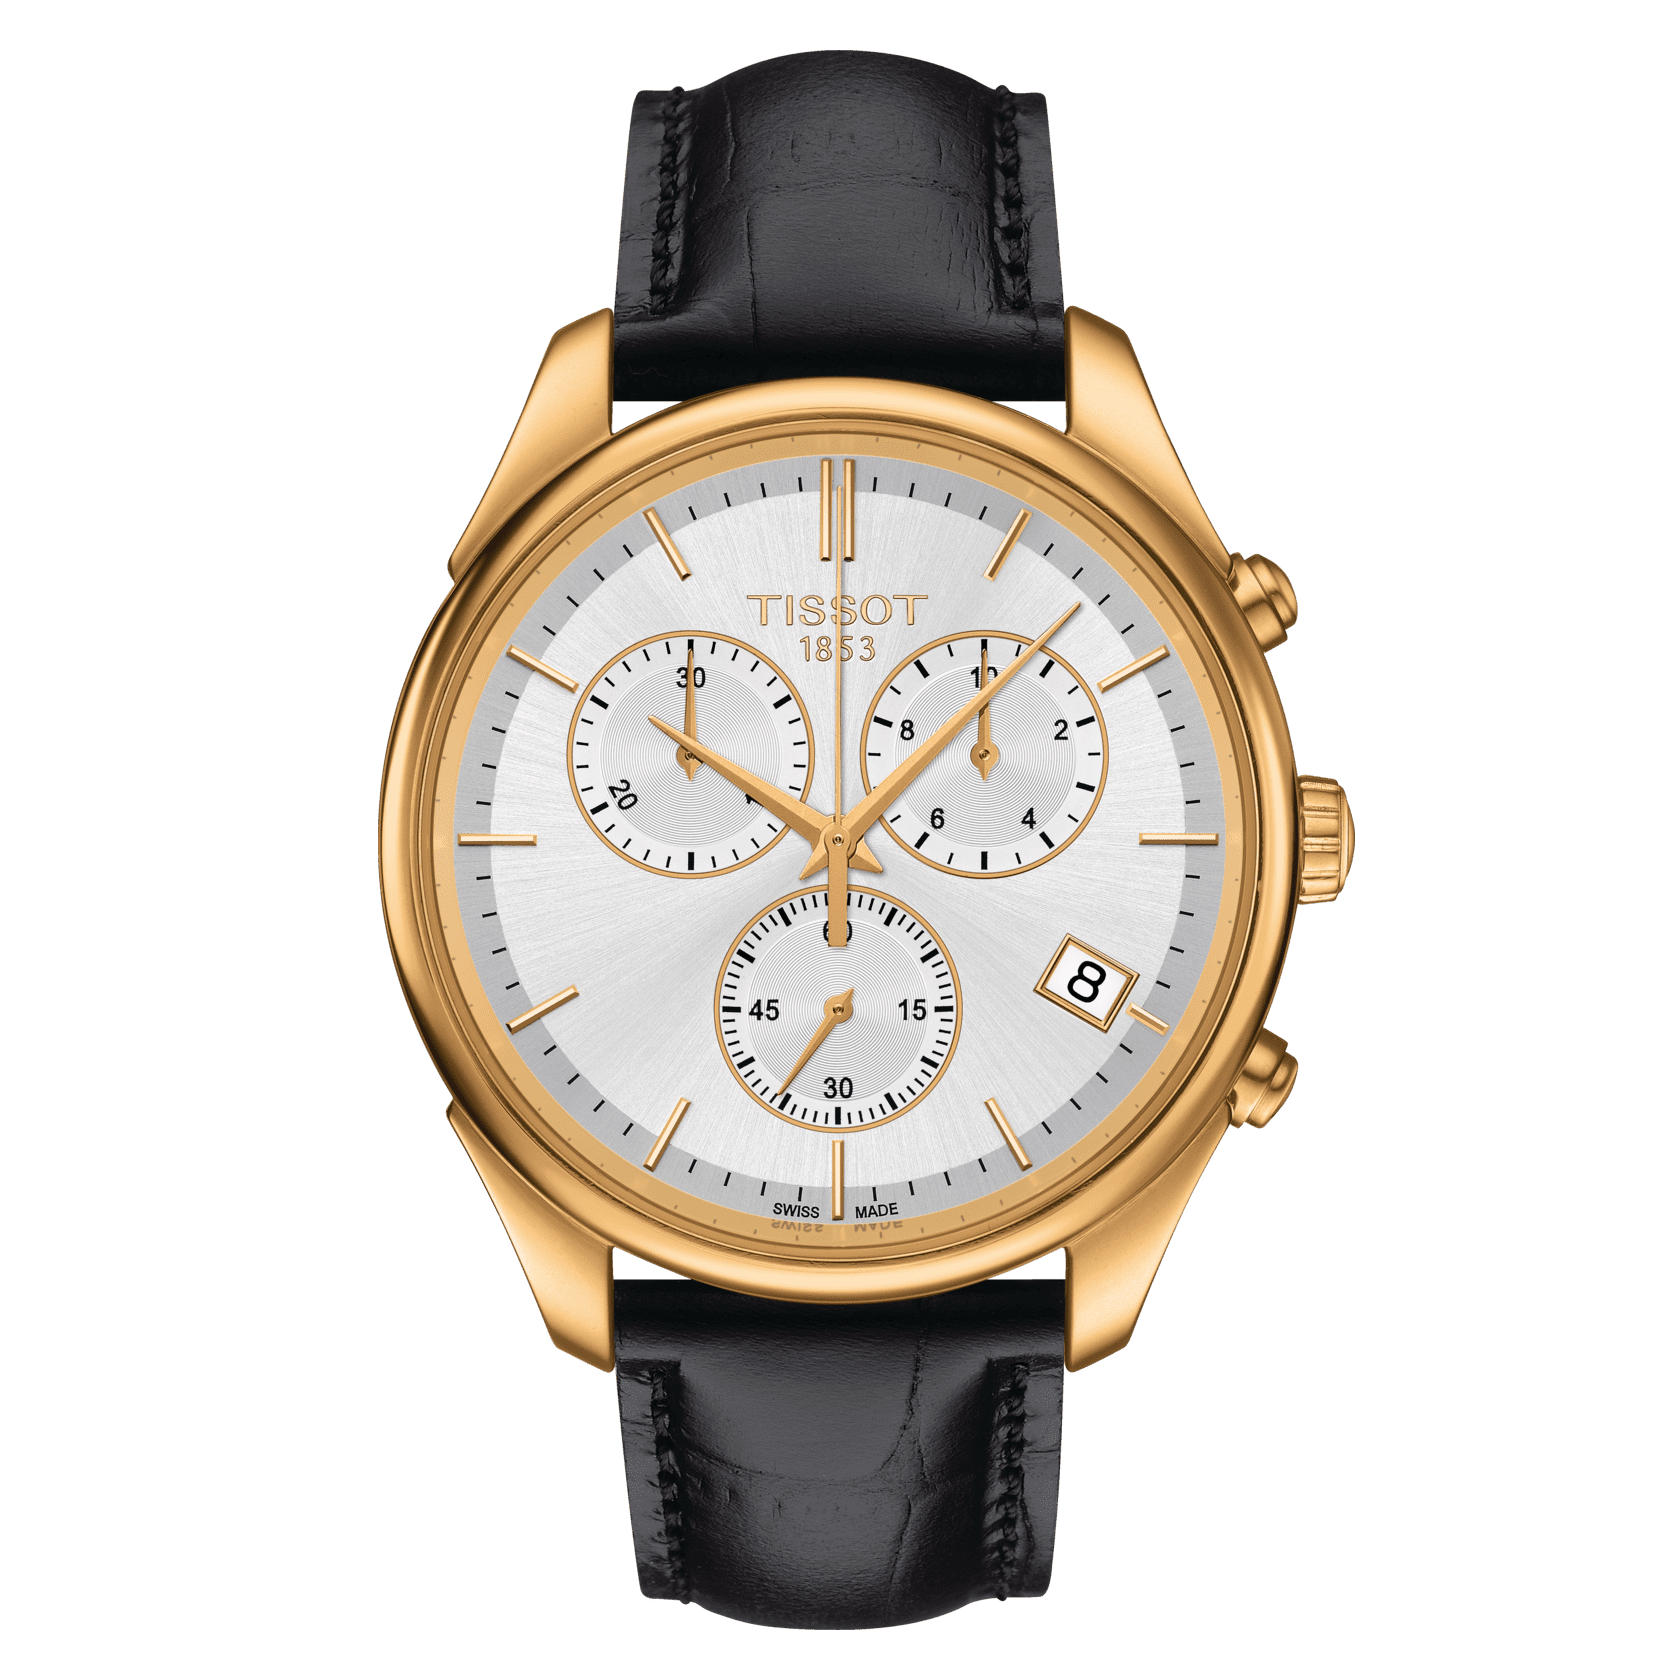 Luxurman Watches Replica